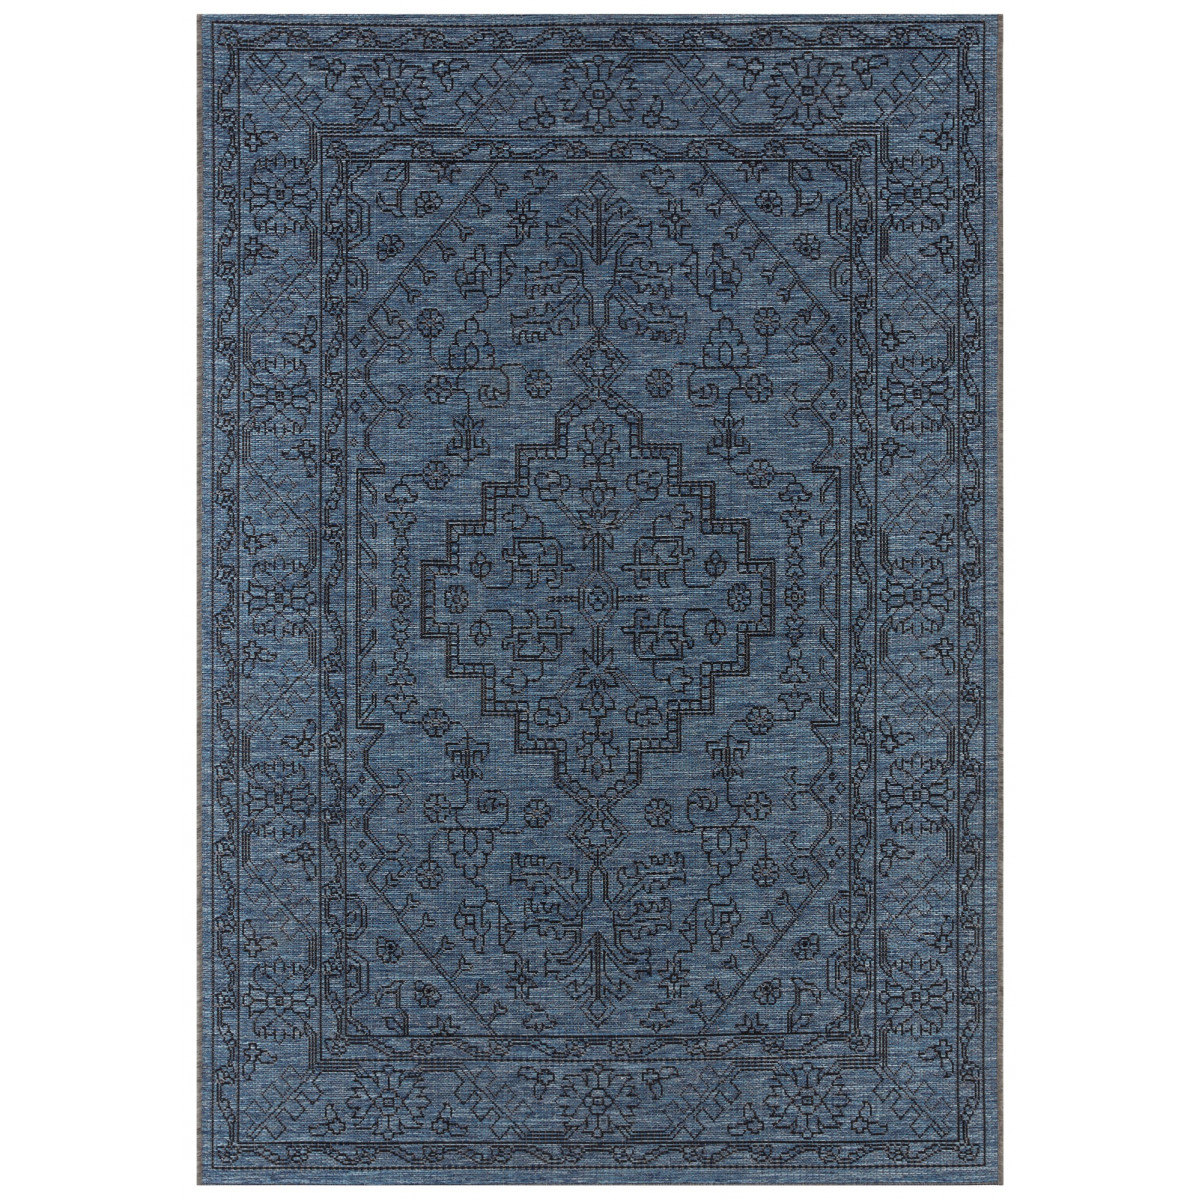 AKCIA: 70x200 cm Kusový koberec Jaffa 103896 Azurblue / Anthracite – na von aj na doma